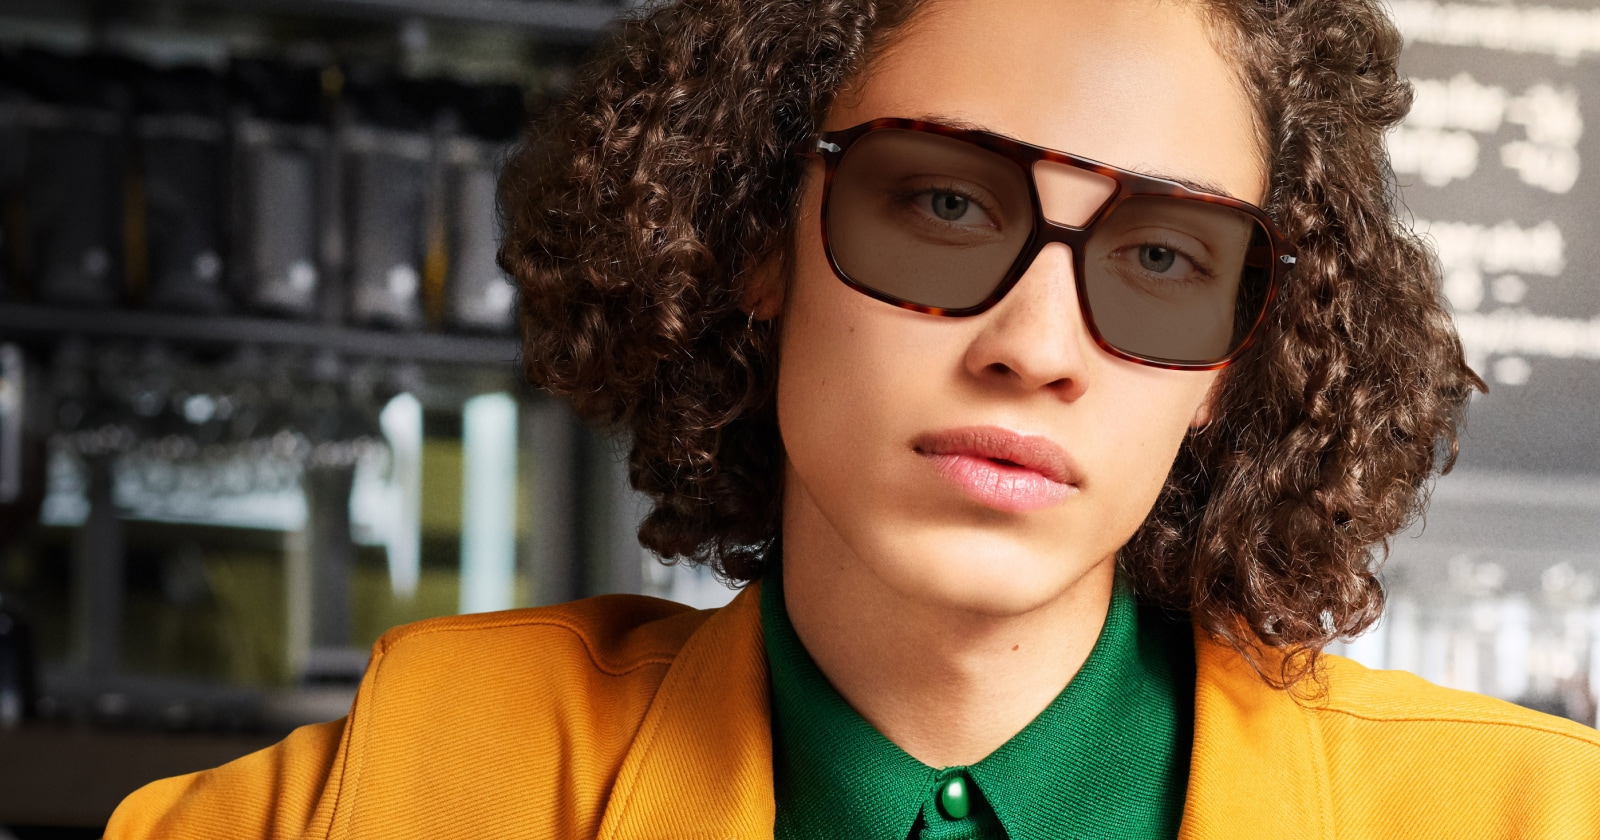 Louis Vuitton Sunglasses Glasses Frames Mirror Tint Eyeglasses